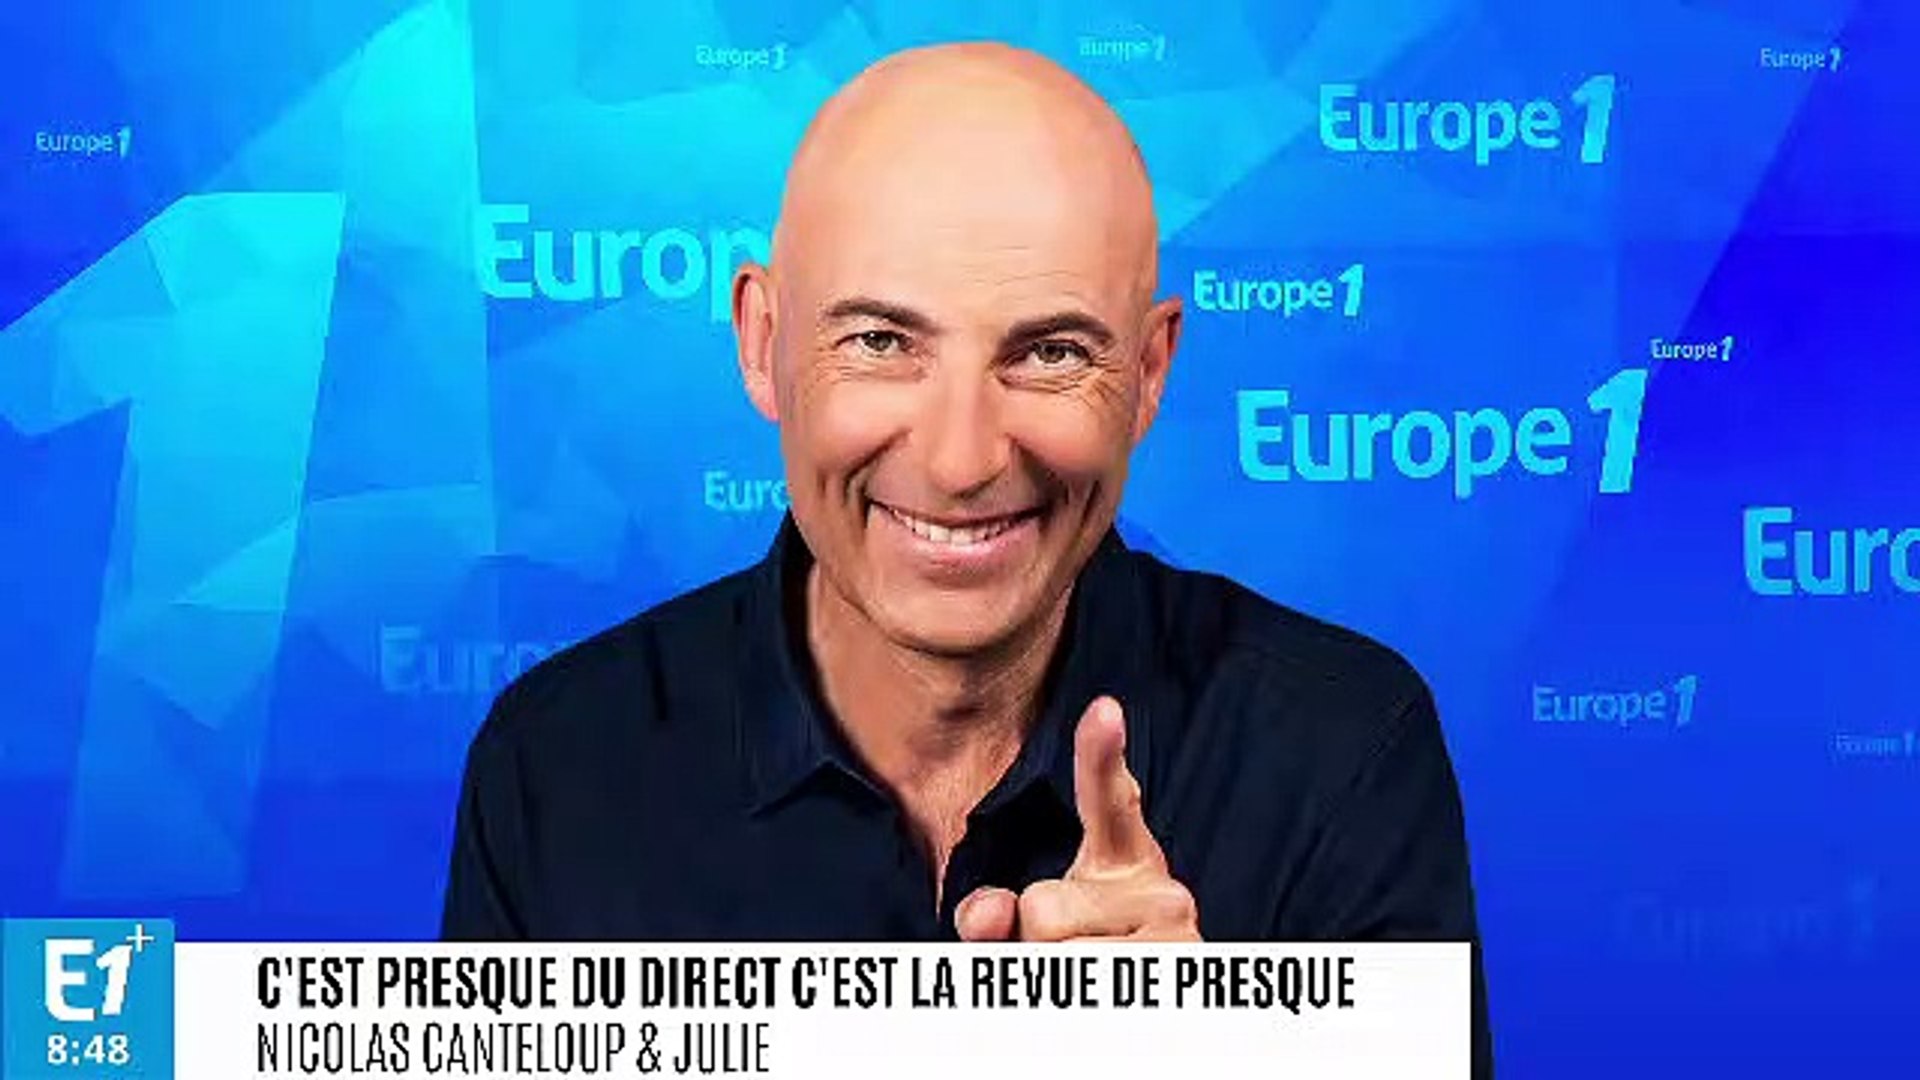 BEST OF - VGE : "Organisons un sleeping devant l'Elysée !" (Canteloup) -  Vidéo Dailymotion